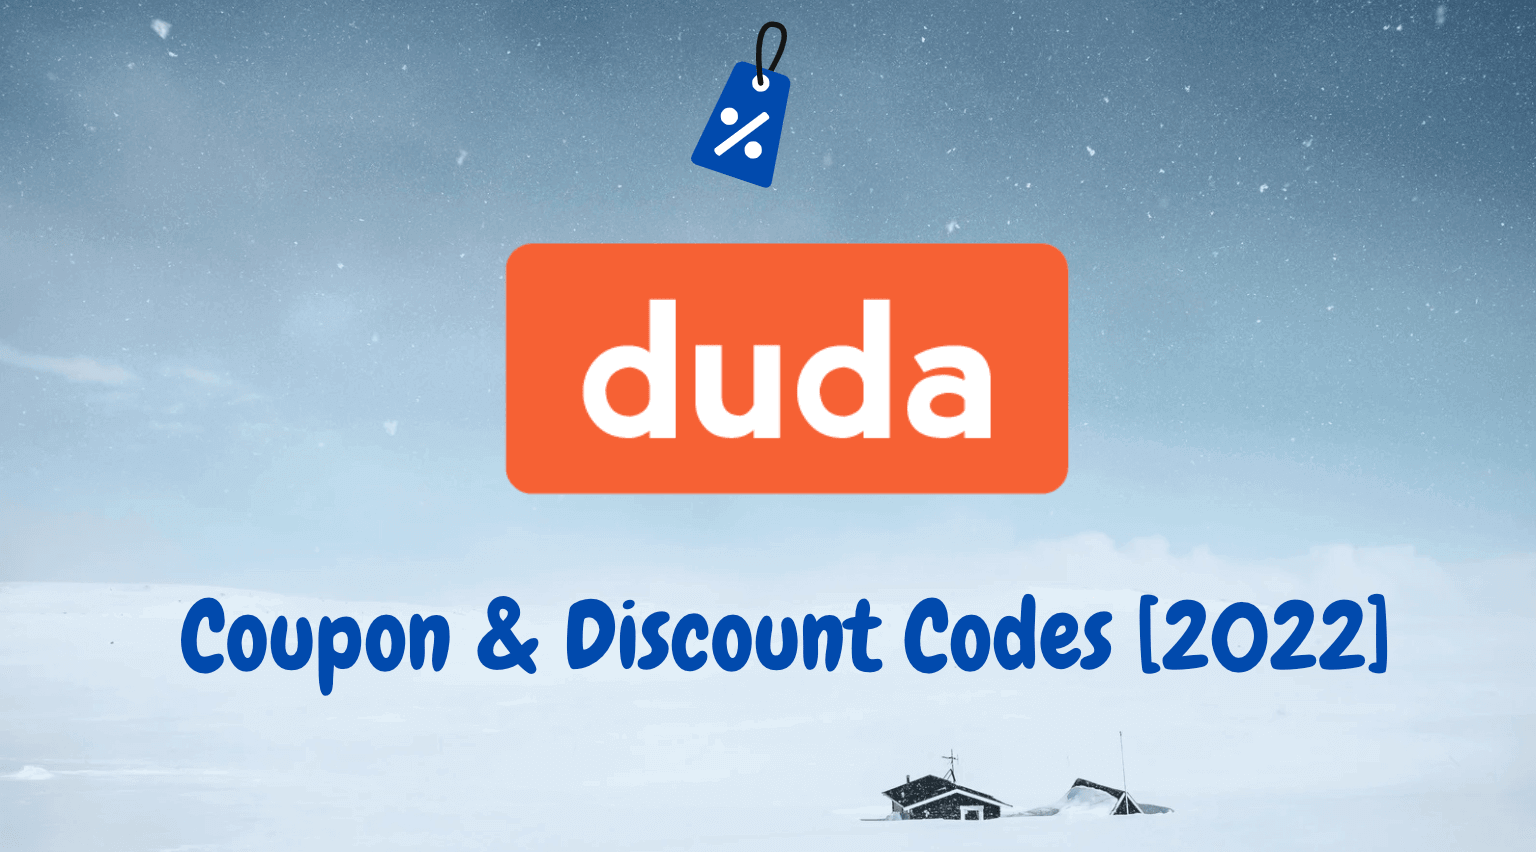 duda coupon codes